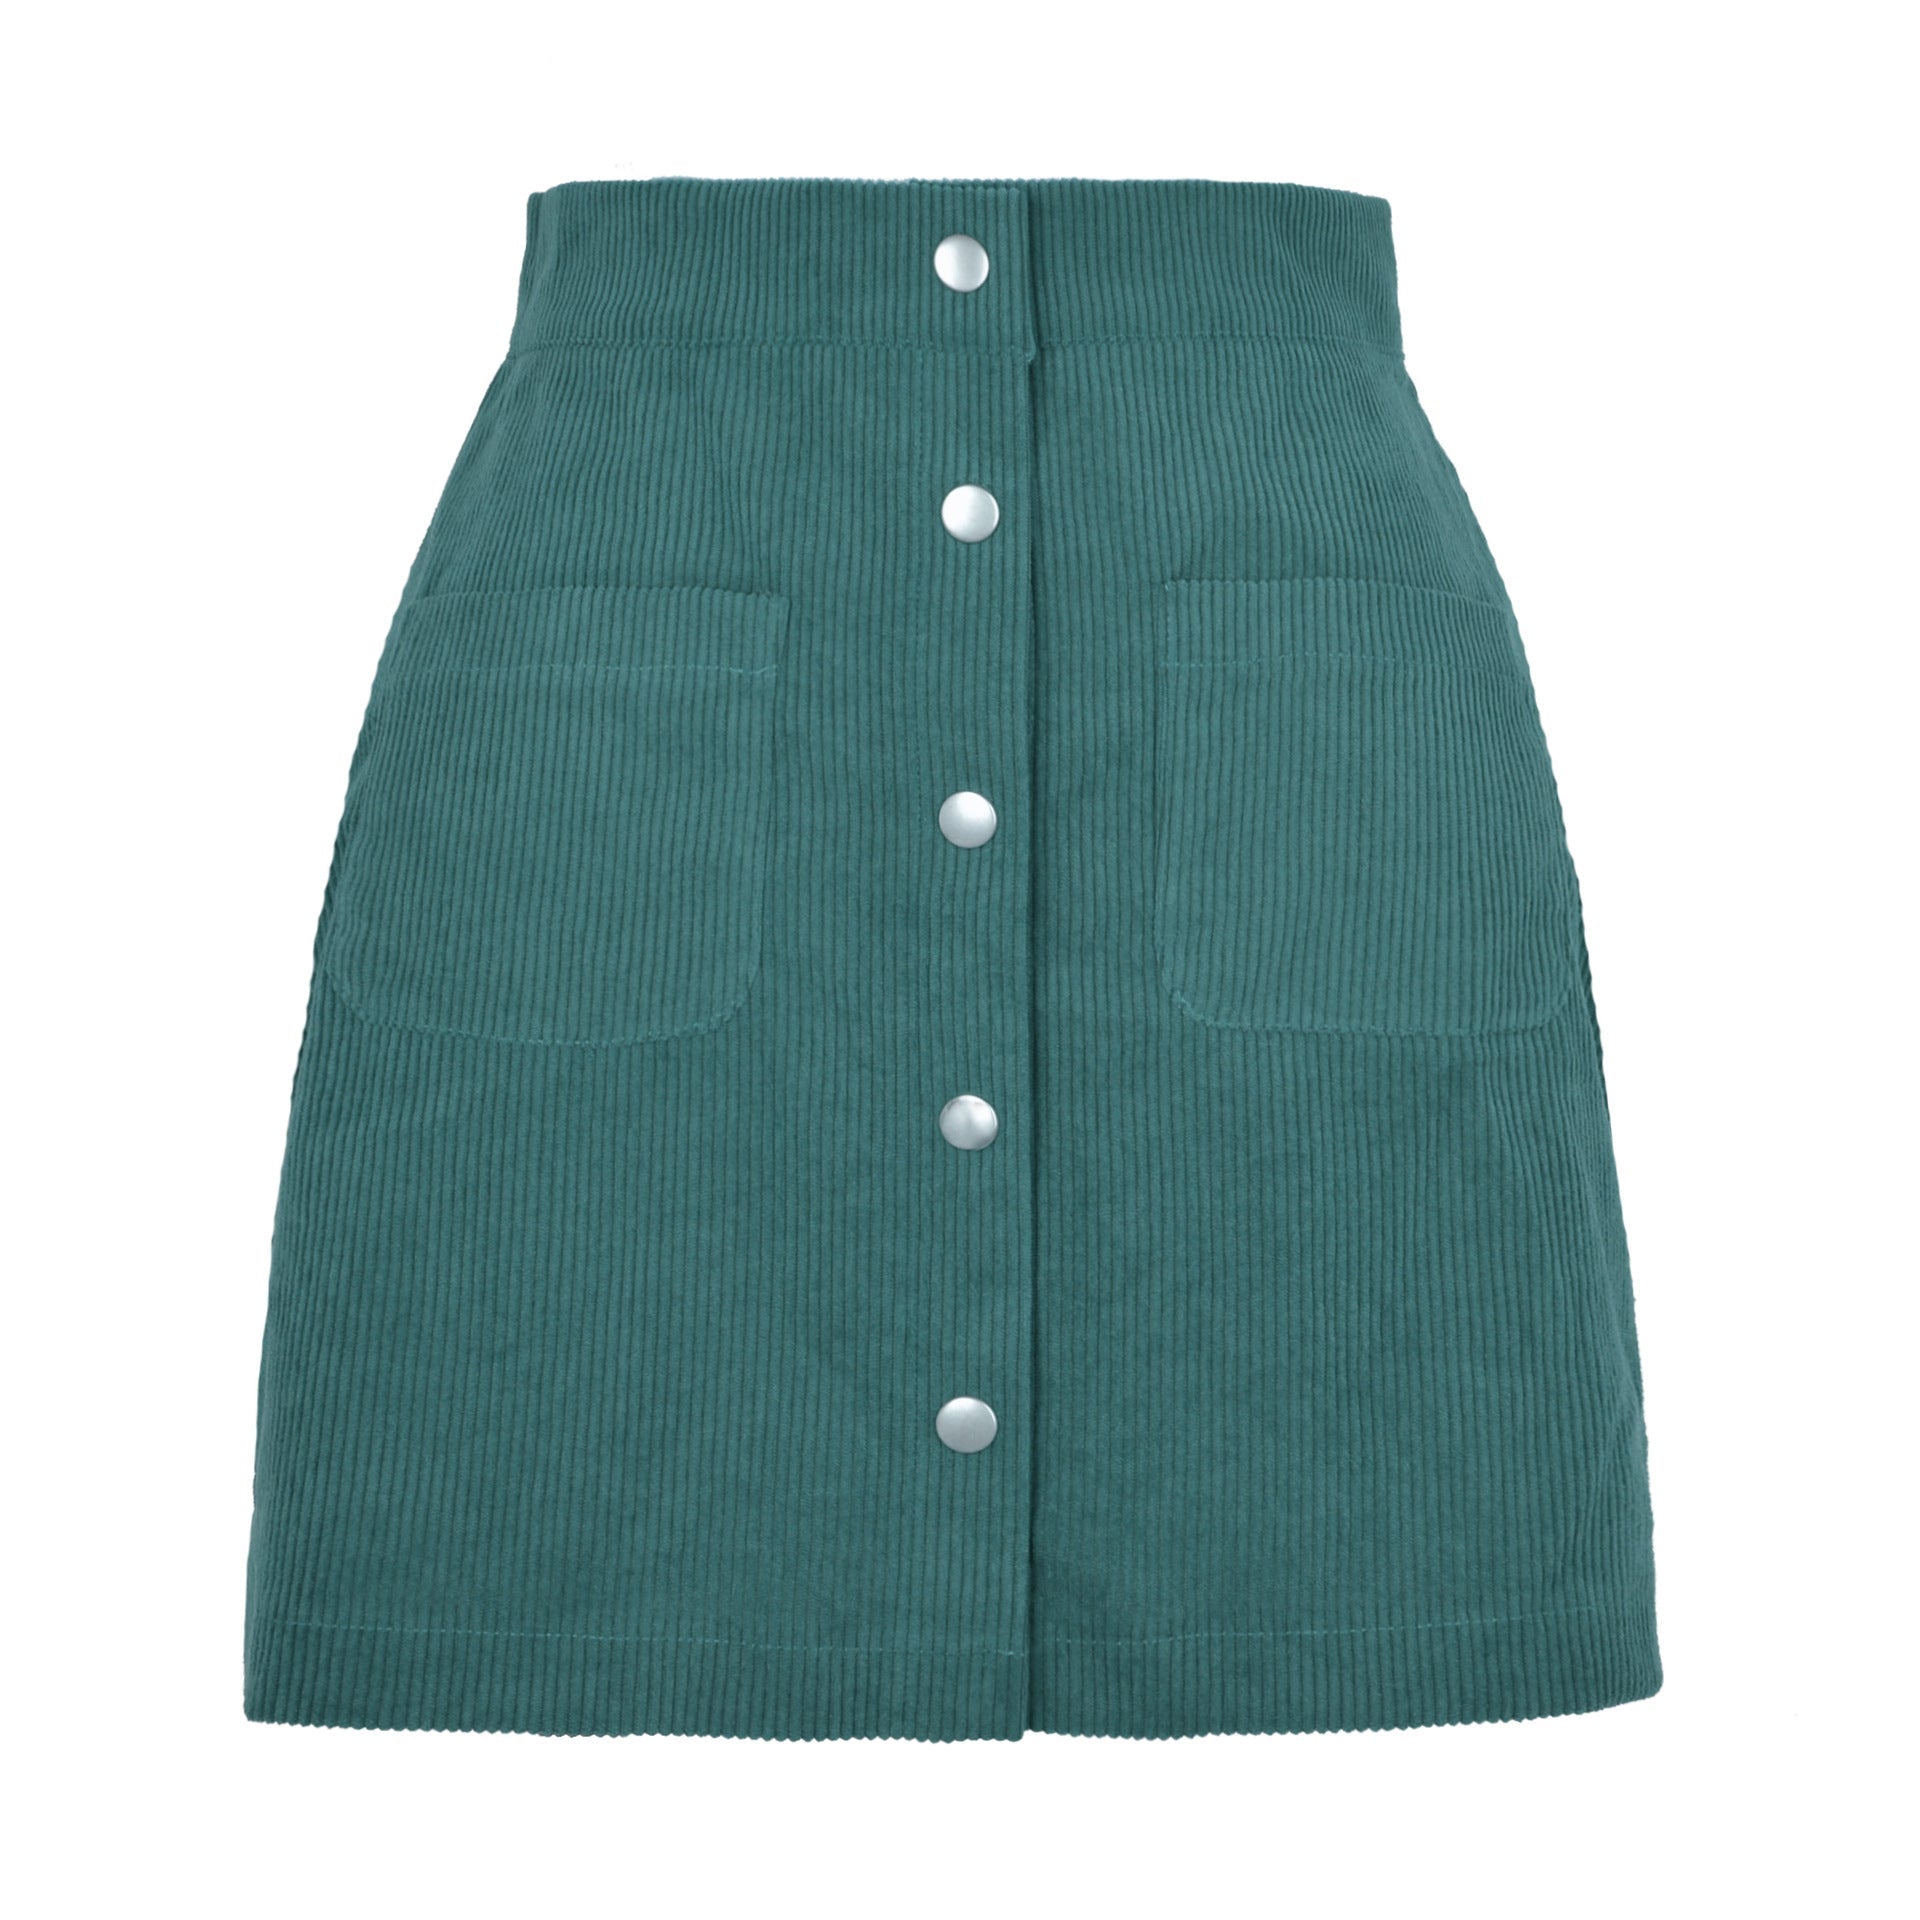 Sasha’s Slim Fit Solid Skirt - S / Green